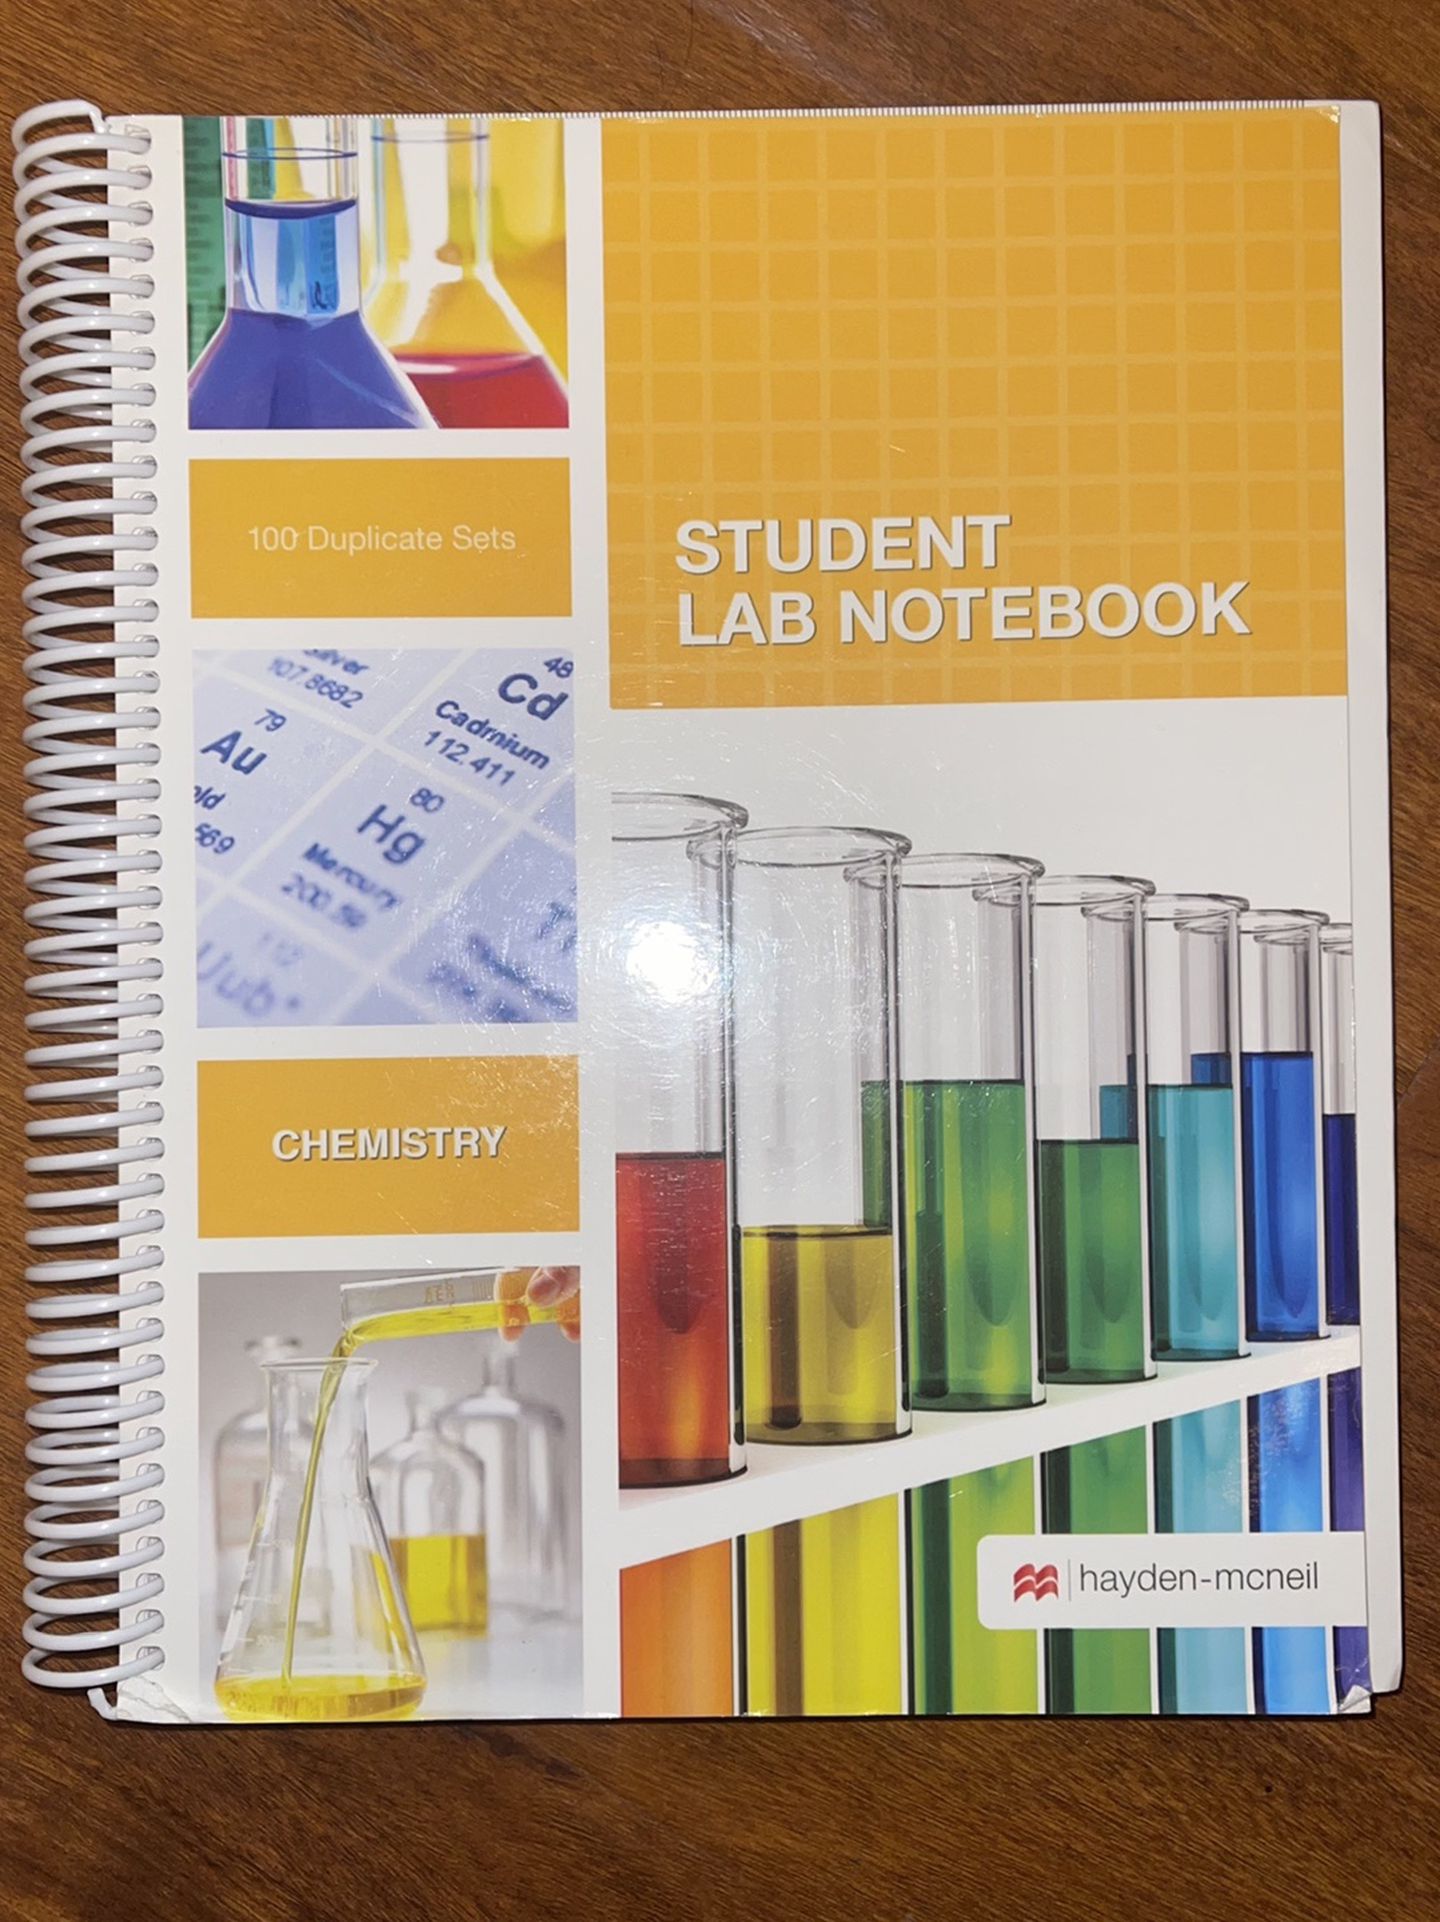 Student Lab Notebook - Chemistry